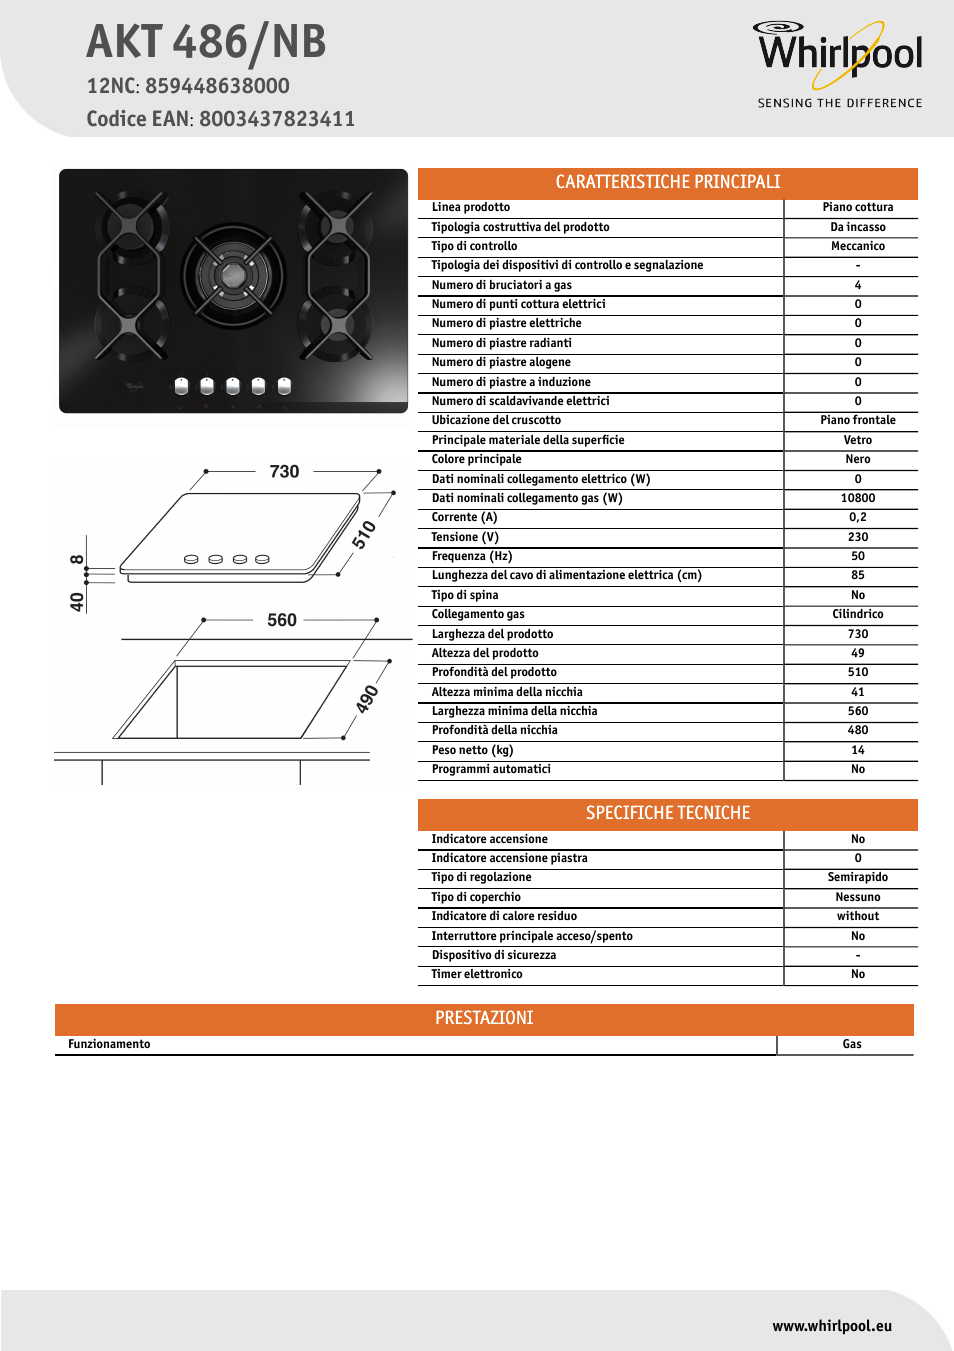 Whirlpool AKT 486-NB Manuale d'uso | Pagine: 1